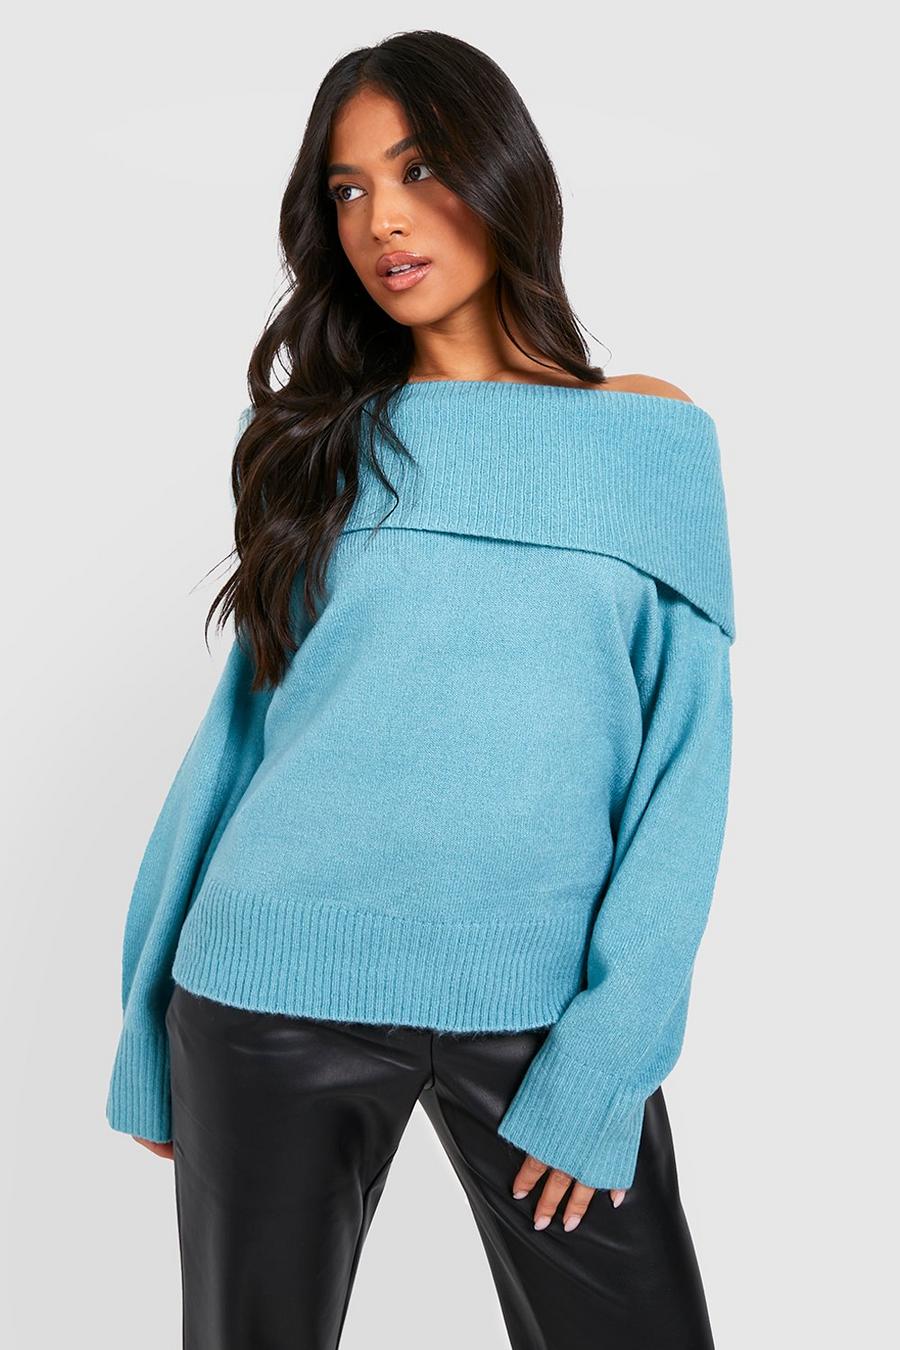 Aqua blue Petite Knitted Off The Shoulder Off The Shoulder Sweater